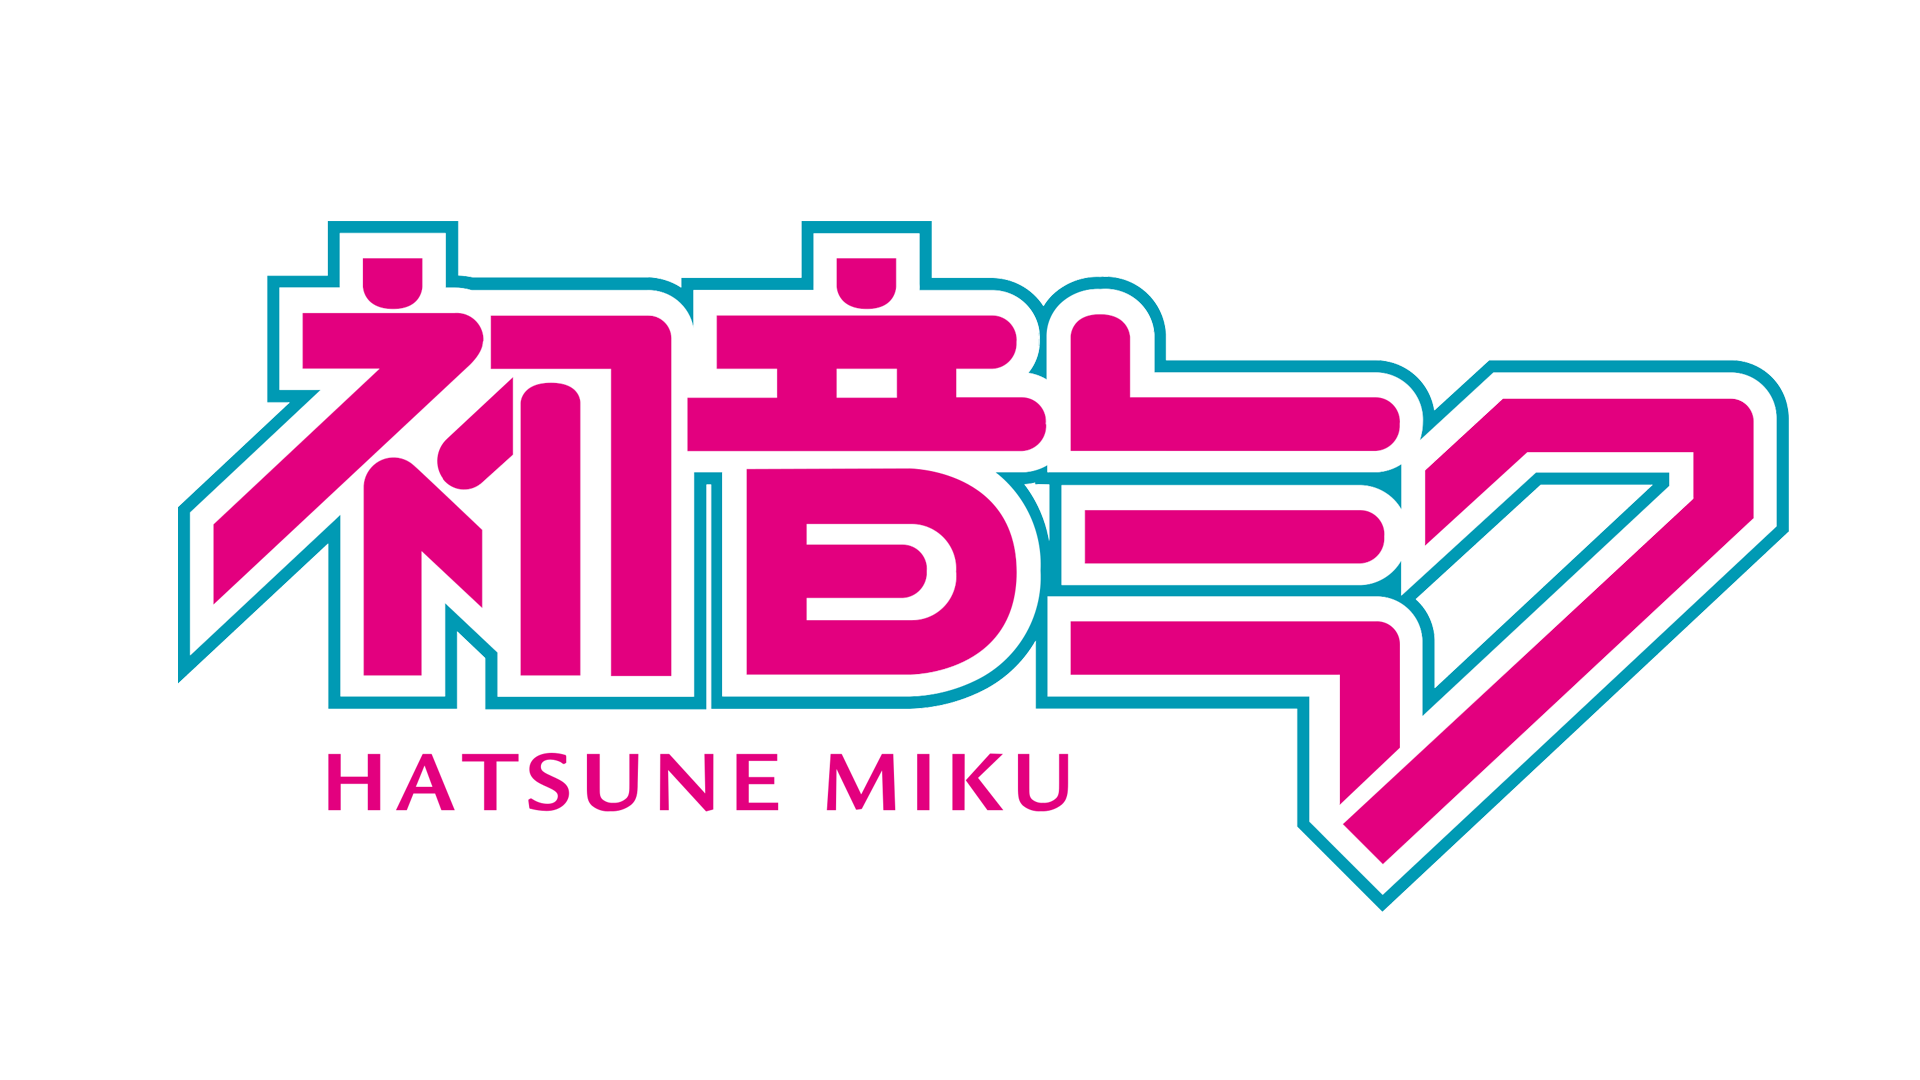 Marque: Hatsune Miku